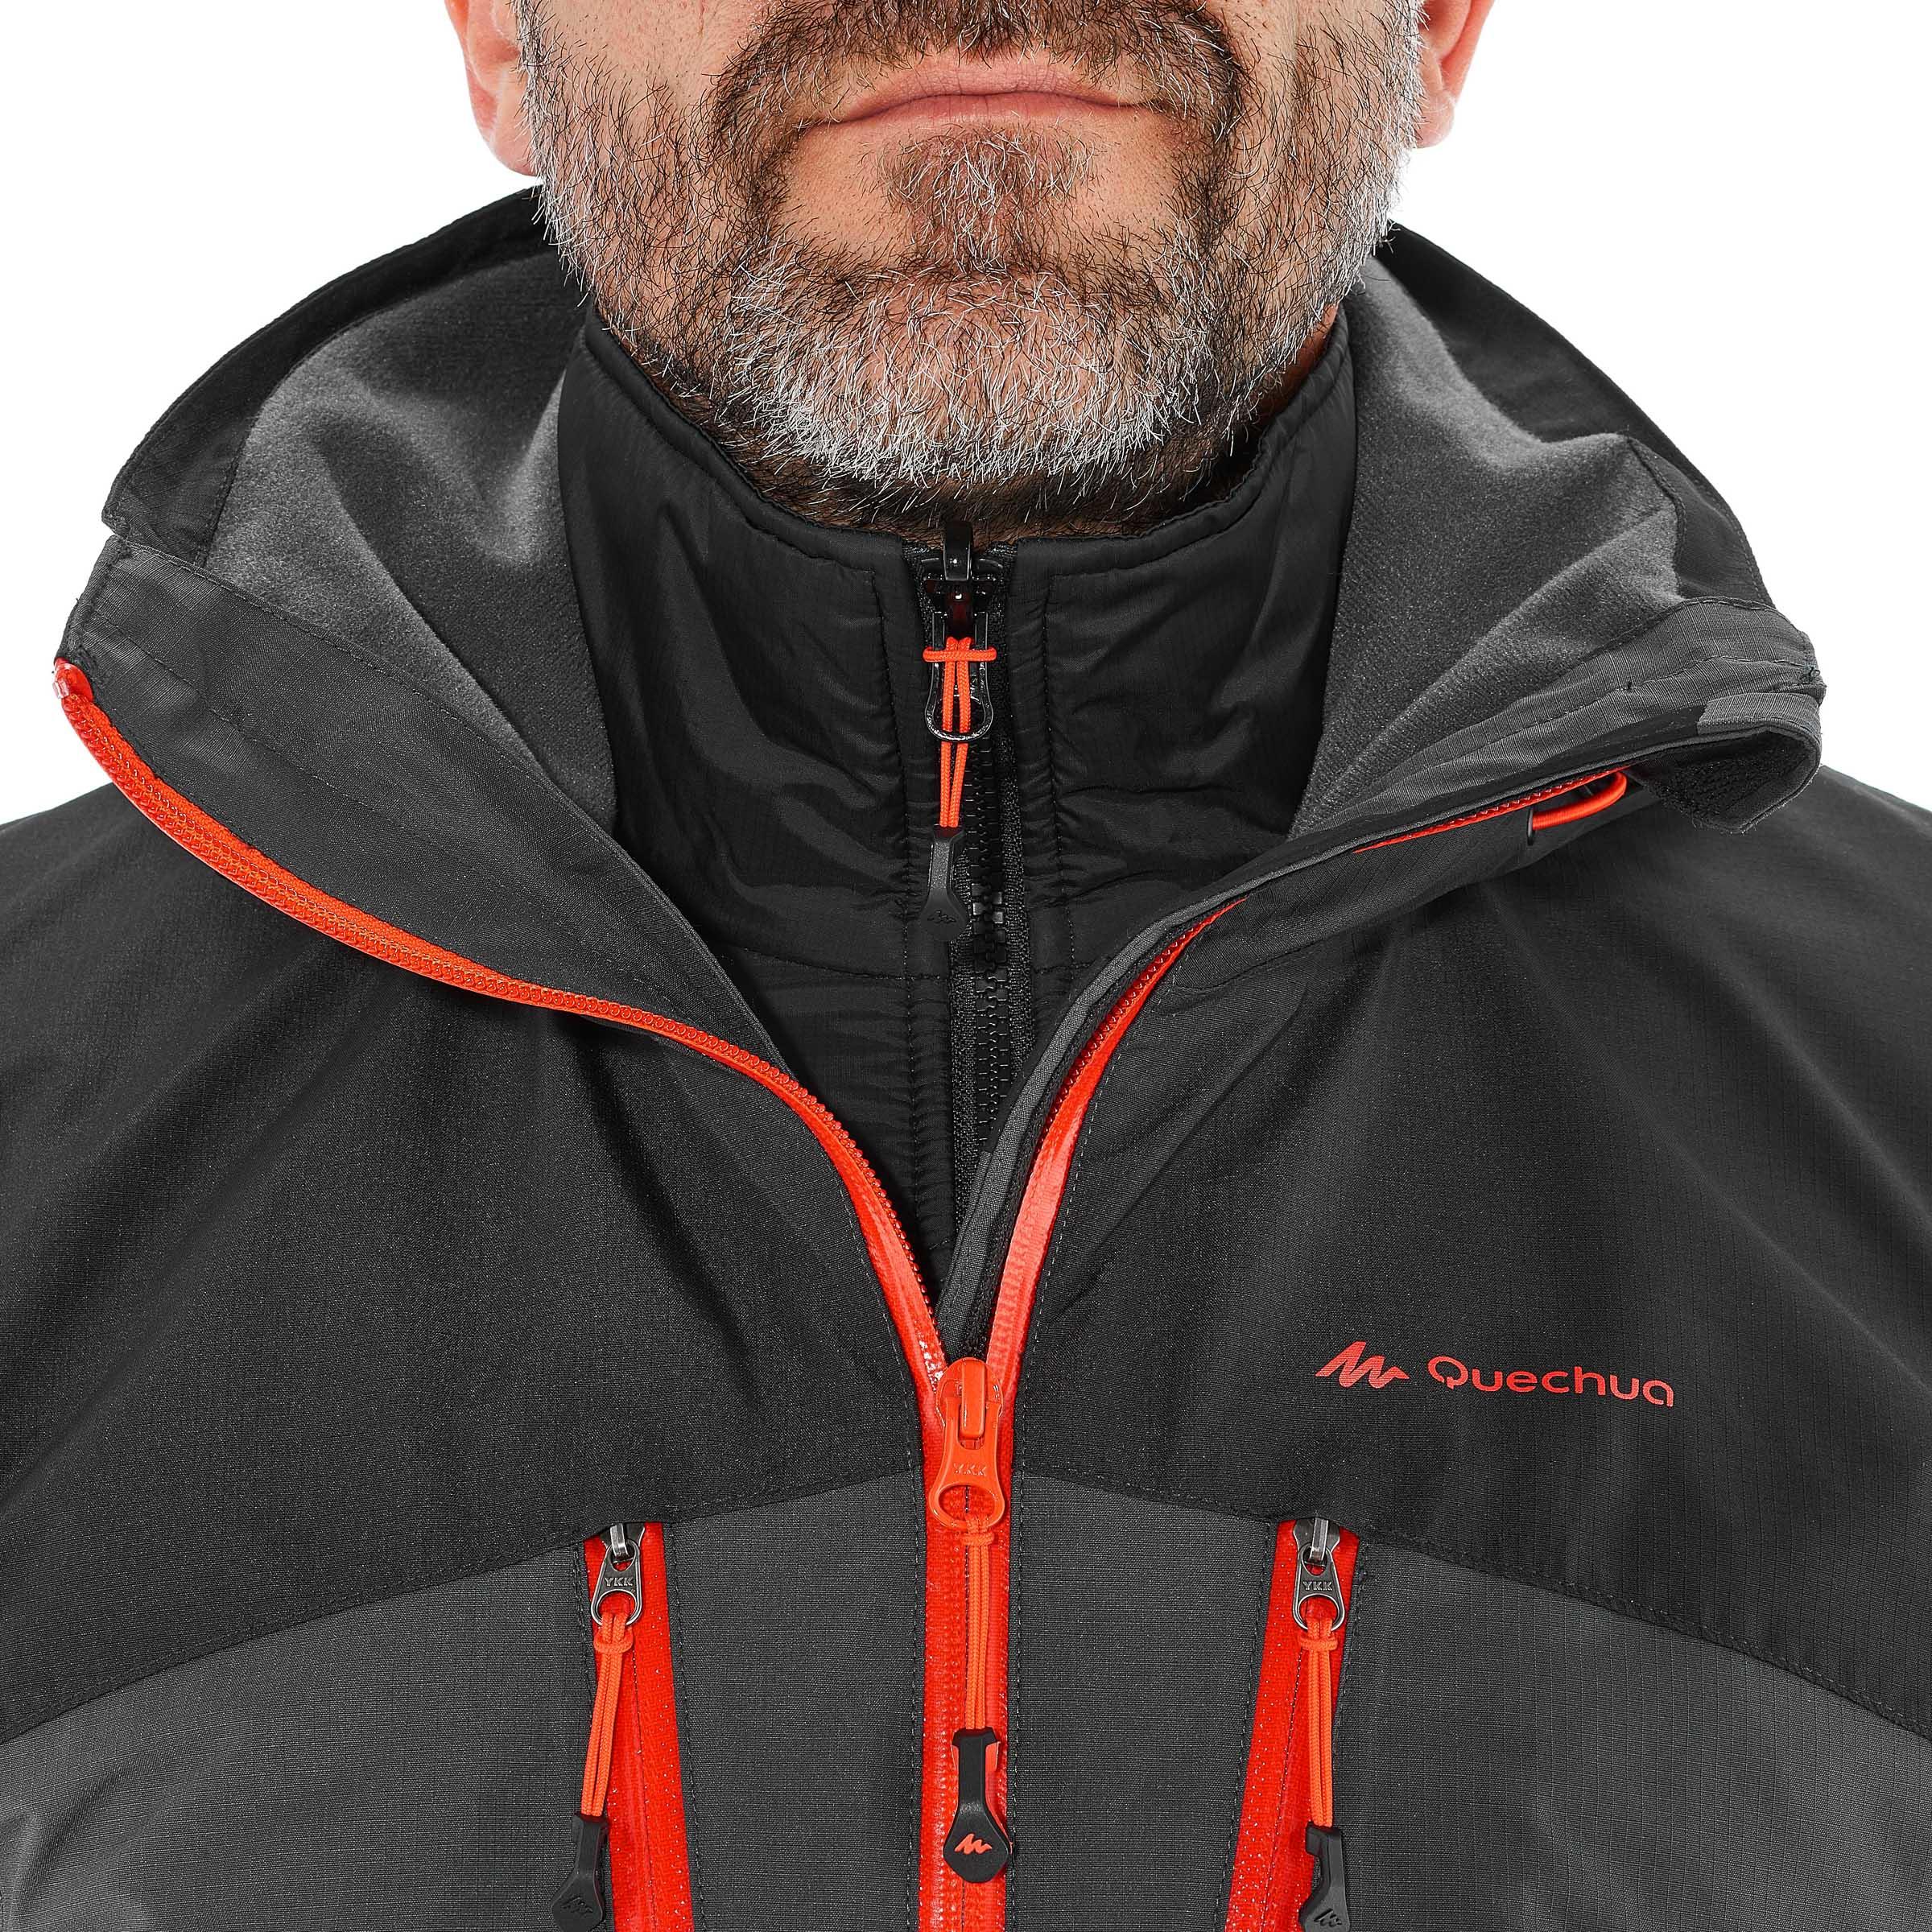 trekking jacket Rainwarm 500 3 in 1 men 